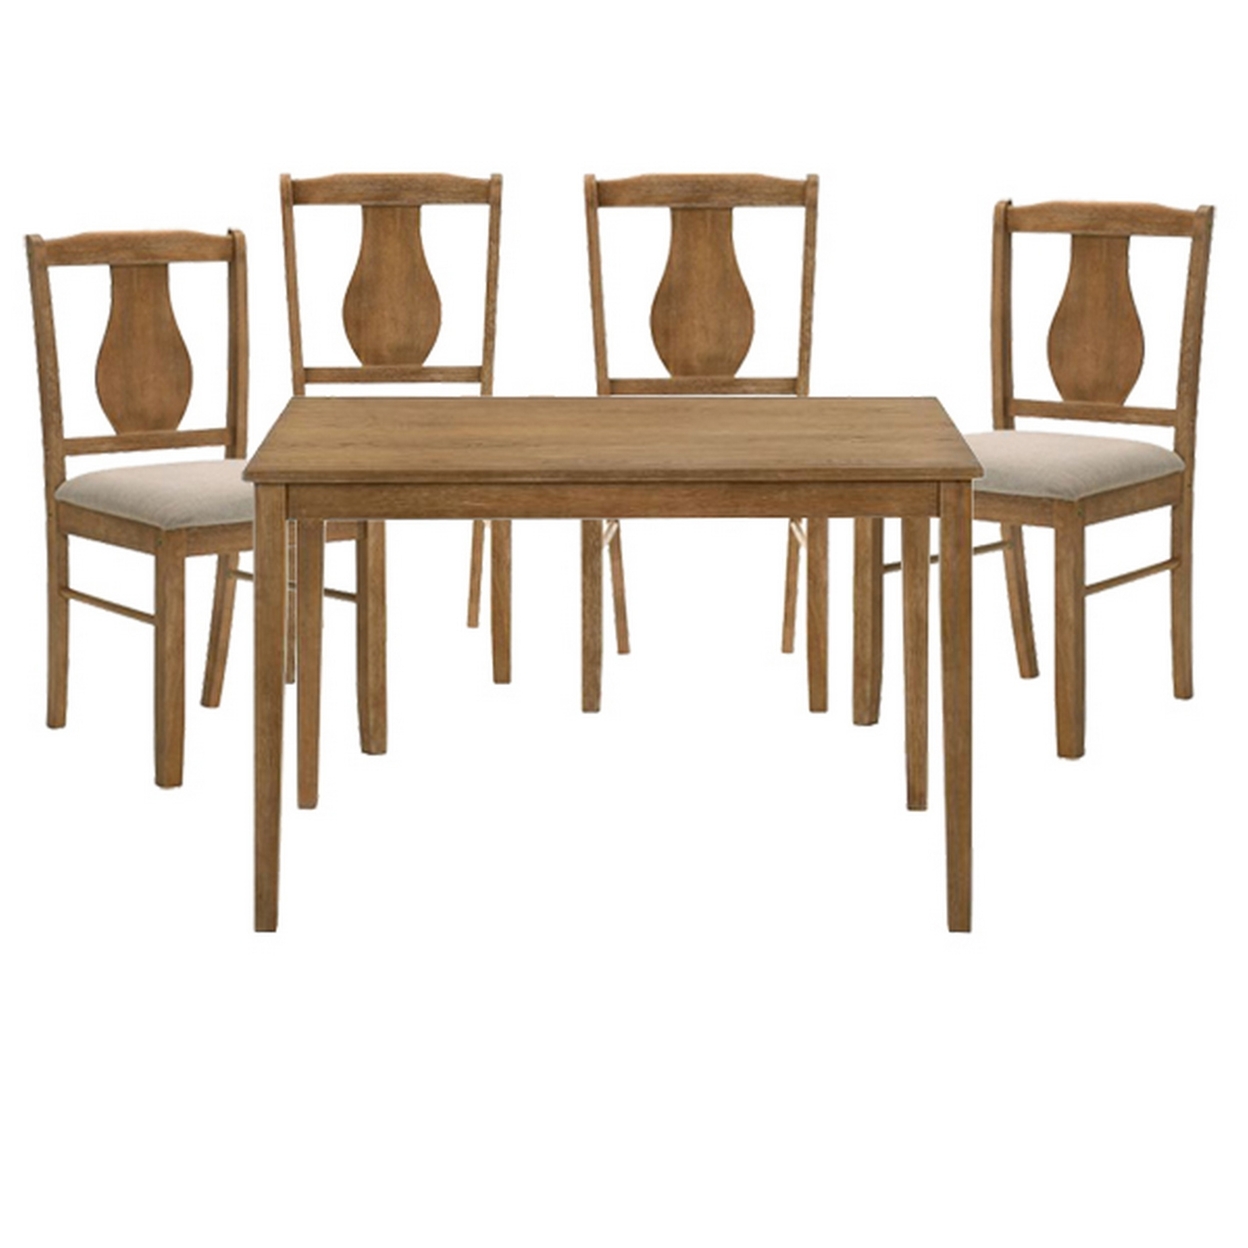 5 Piece Dining Table Set With 4 Chairs, Rubberwood, Weathered Oak - Saltoro Sherpi